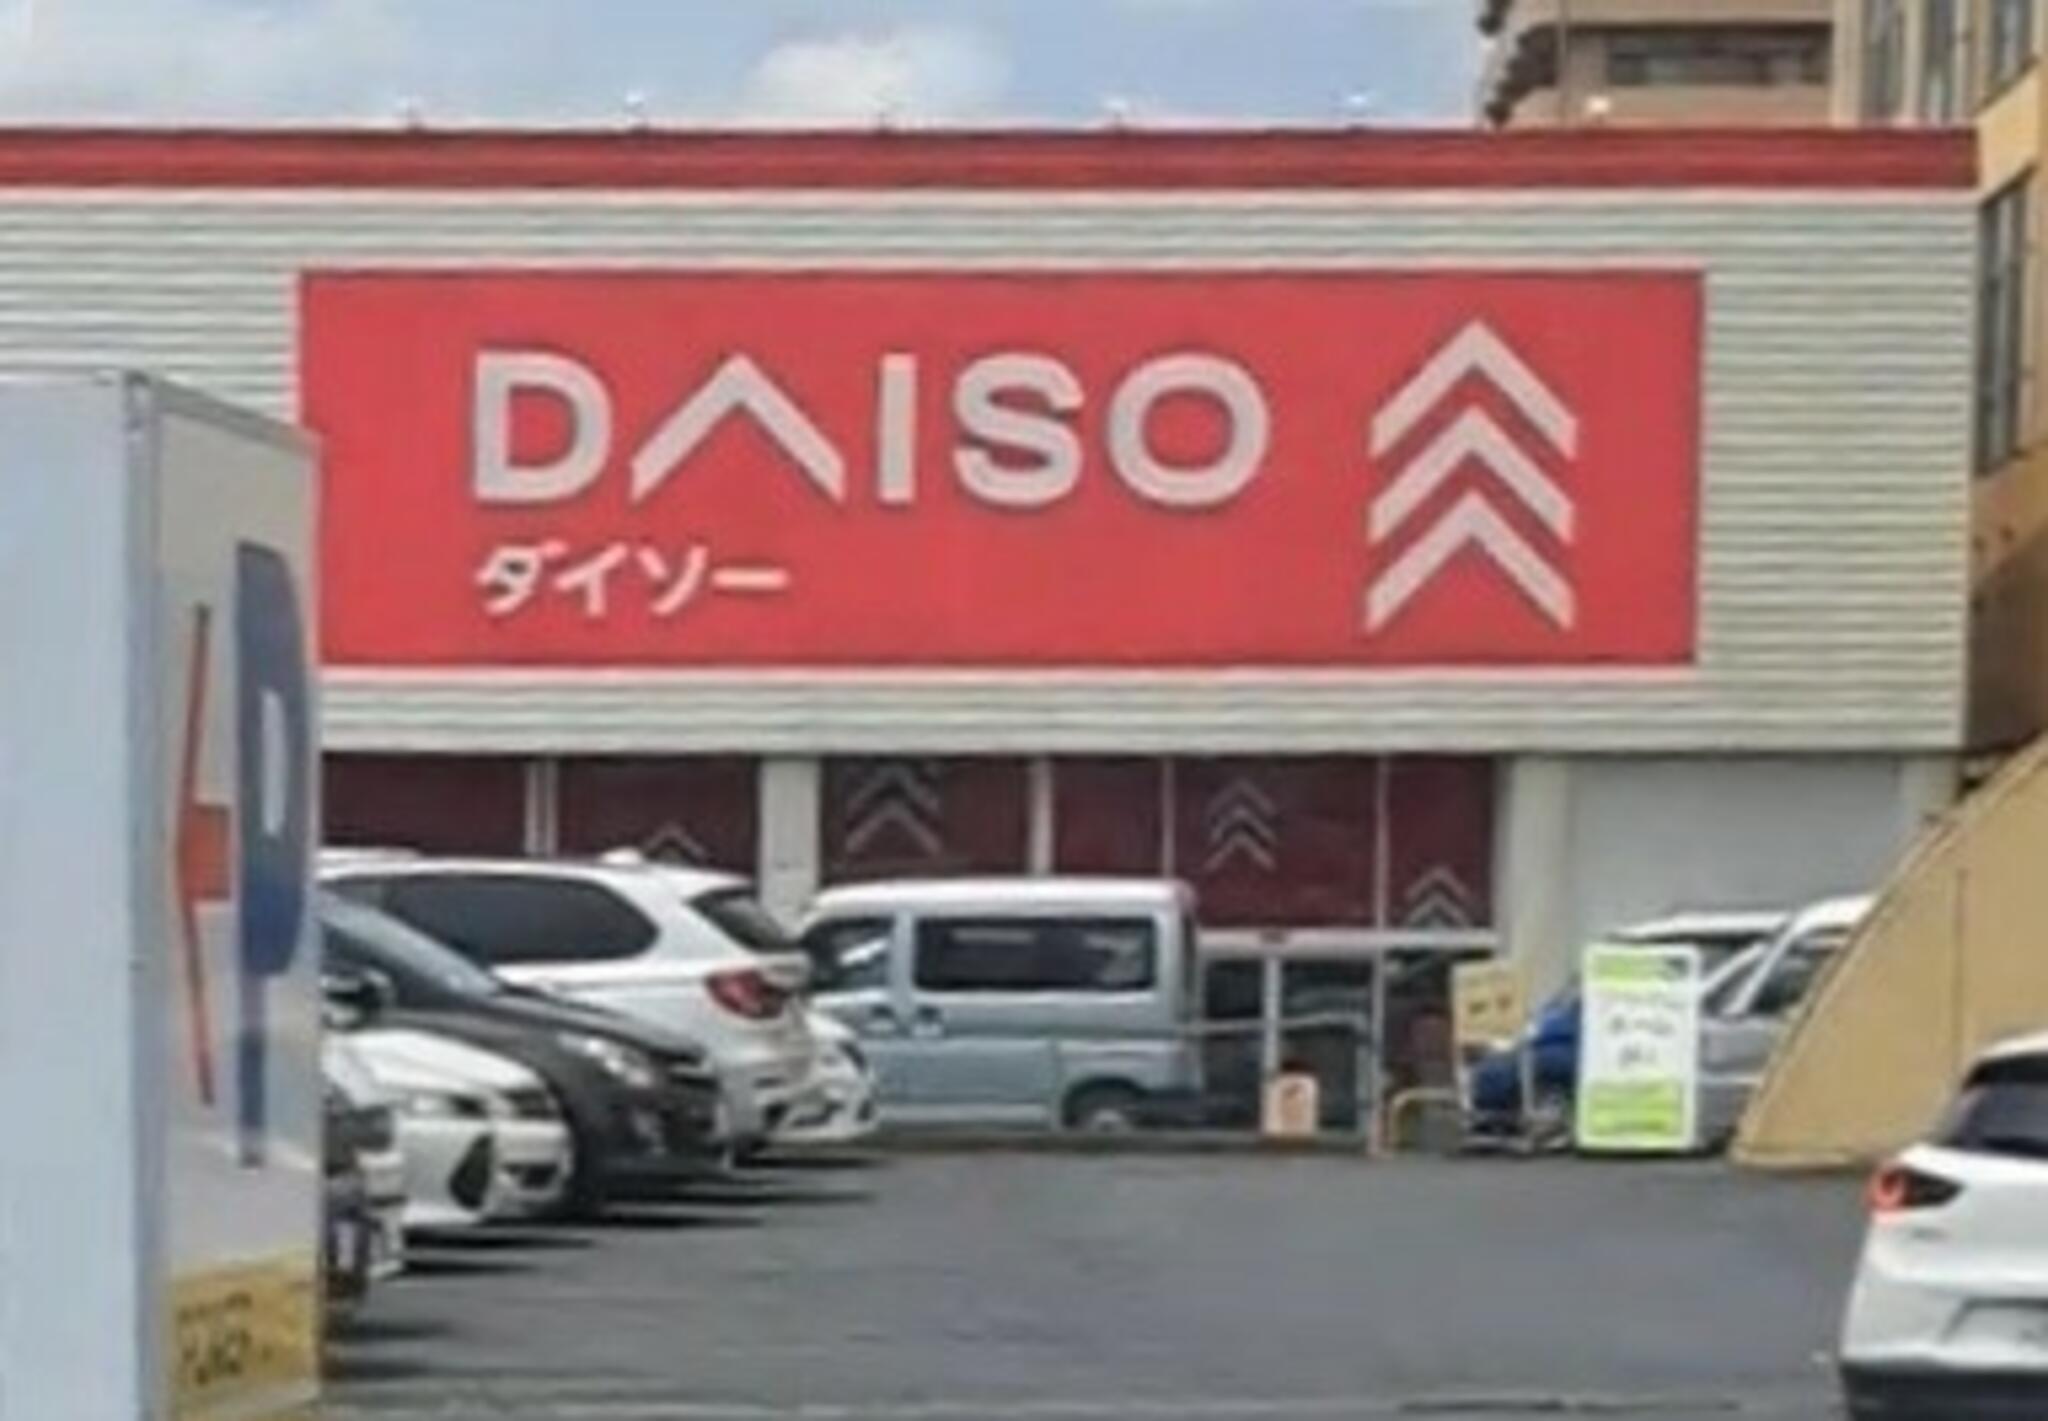 DAISO 水戸見和店の代表写真3